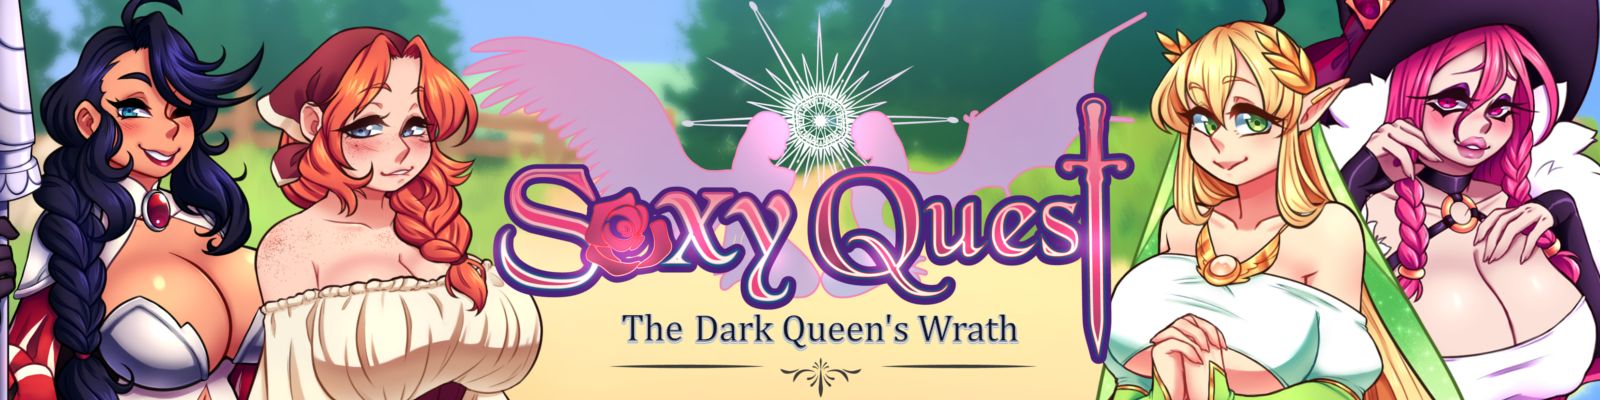 Sexy Quest The Dark Queen's Wrath Apk Adult Game Download